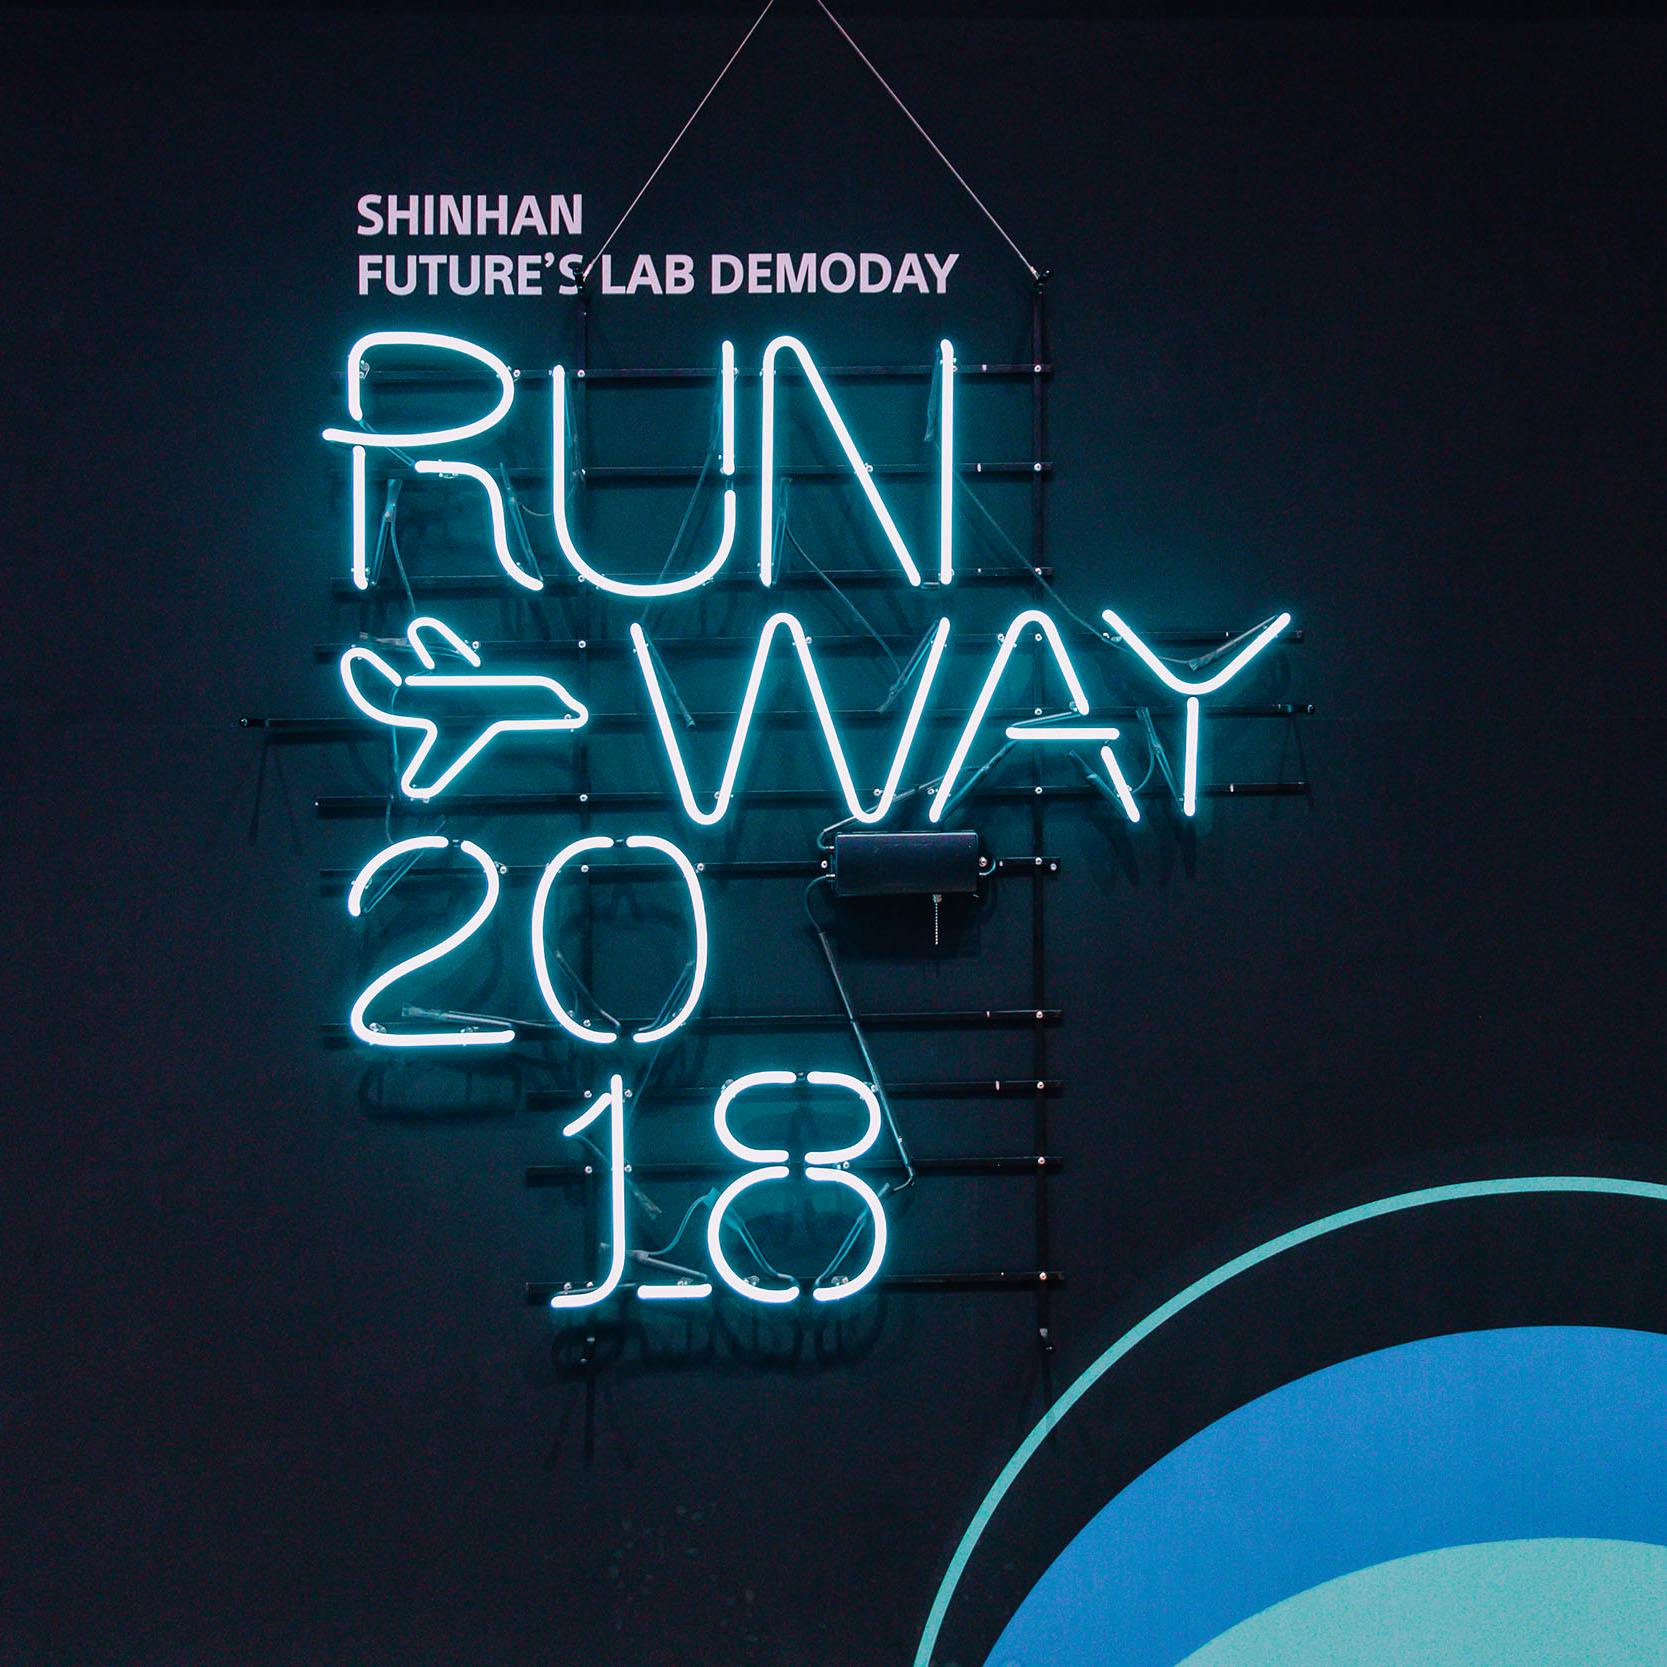 Shinhan Future's Lab Demoday Runway 2018